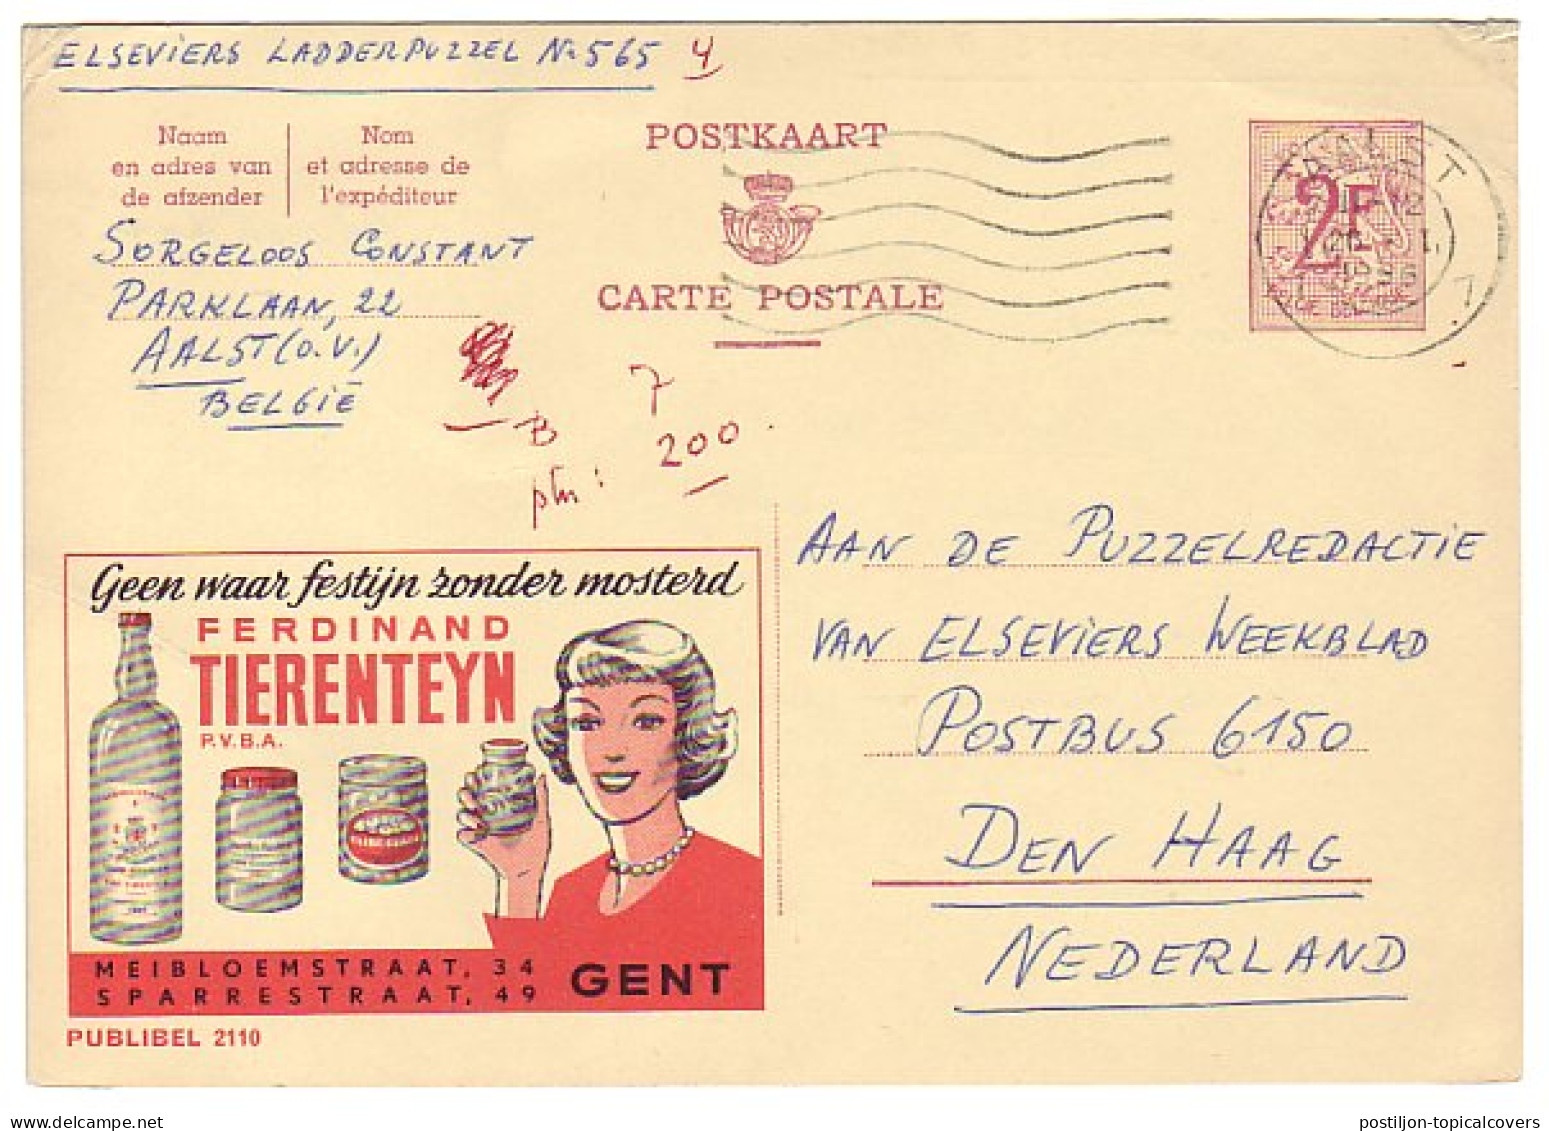 Publibel - Postal Stationery Belgium 1966 Mustard - Food